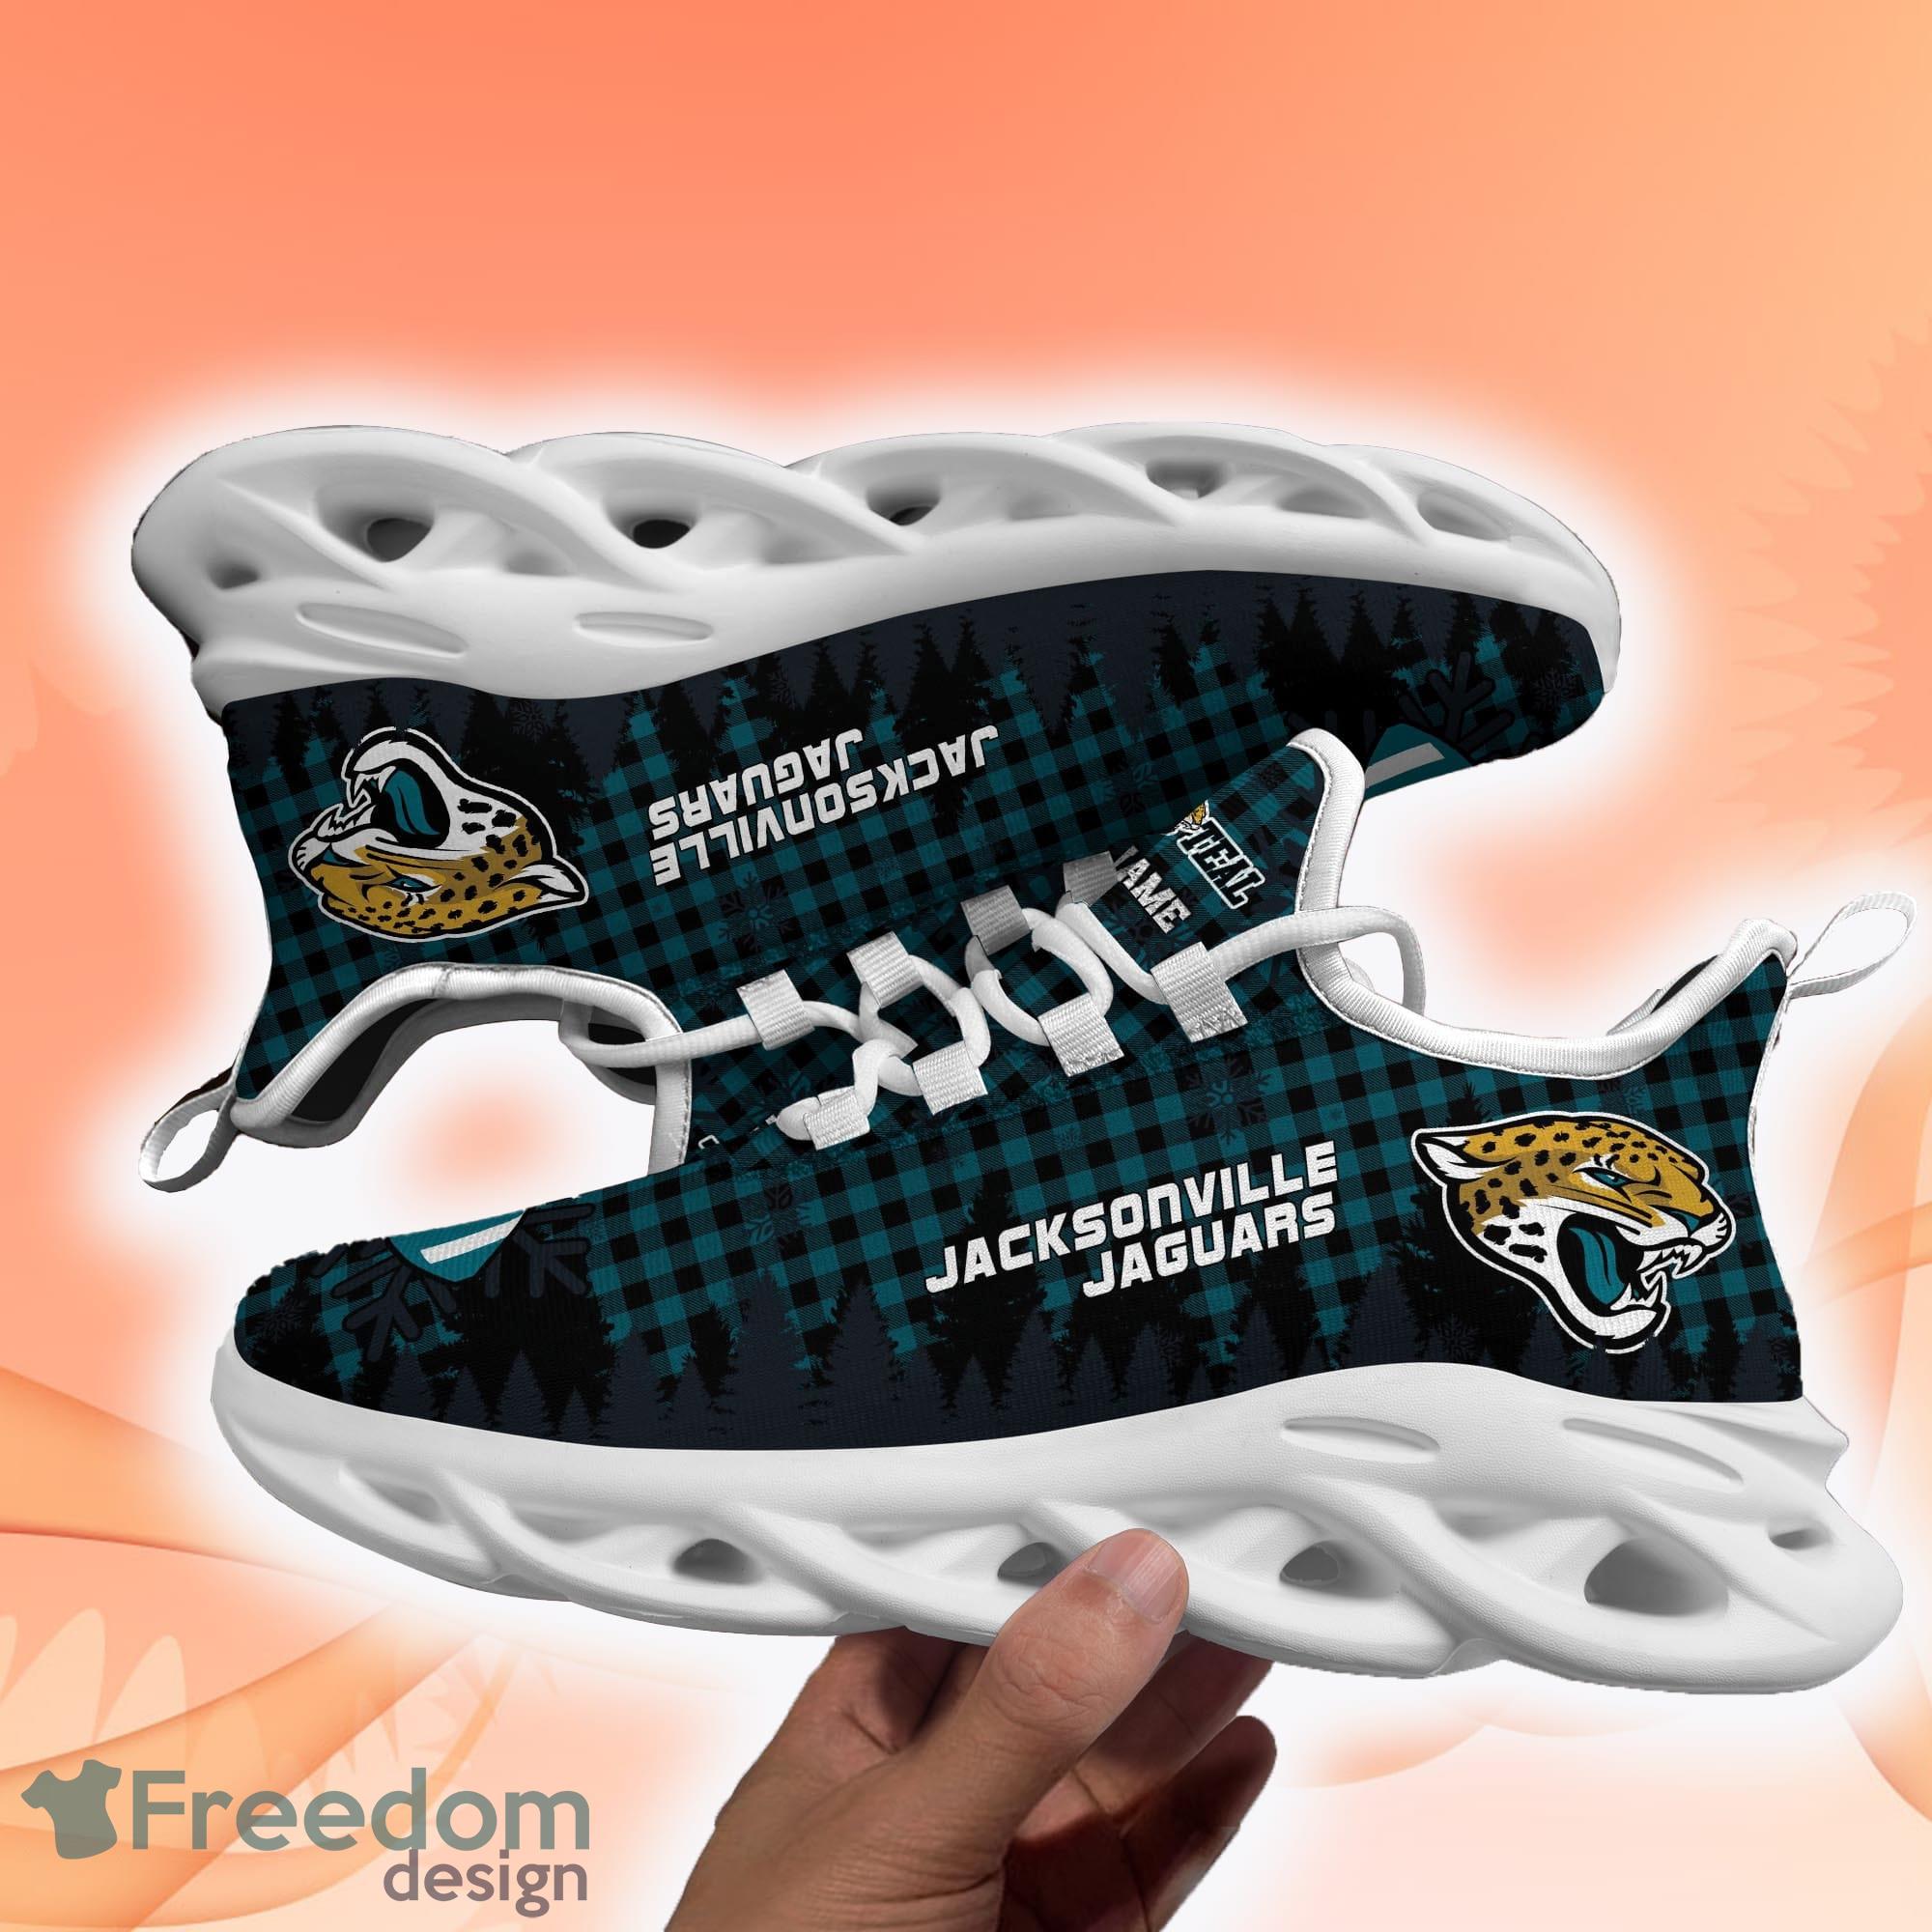 NFL Jacksonville Jaguars Custom Name Number Ugly Christmas Sweater